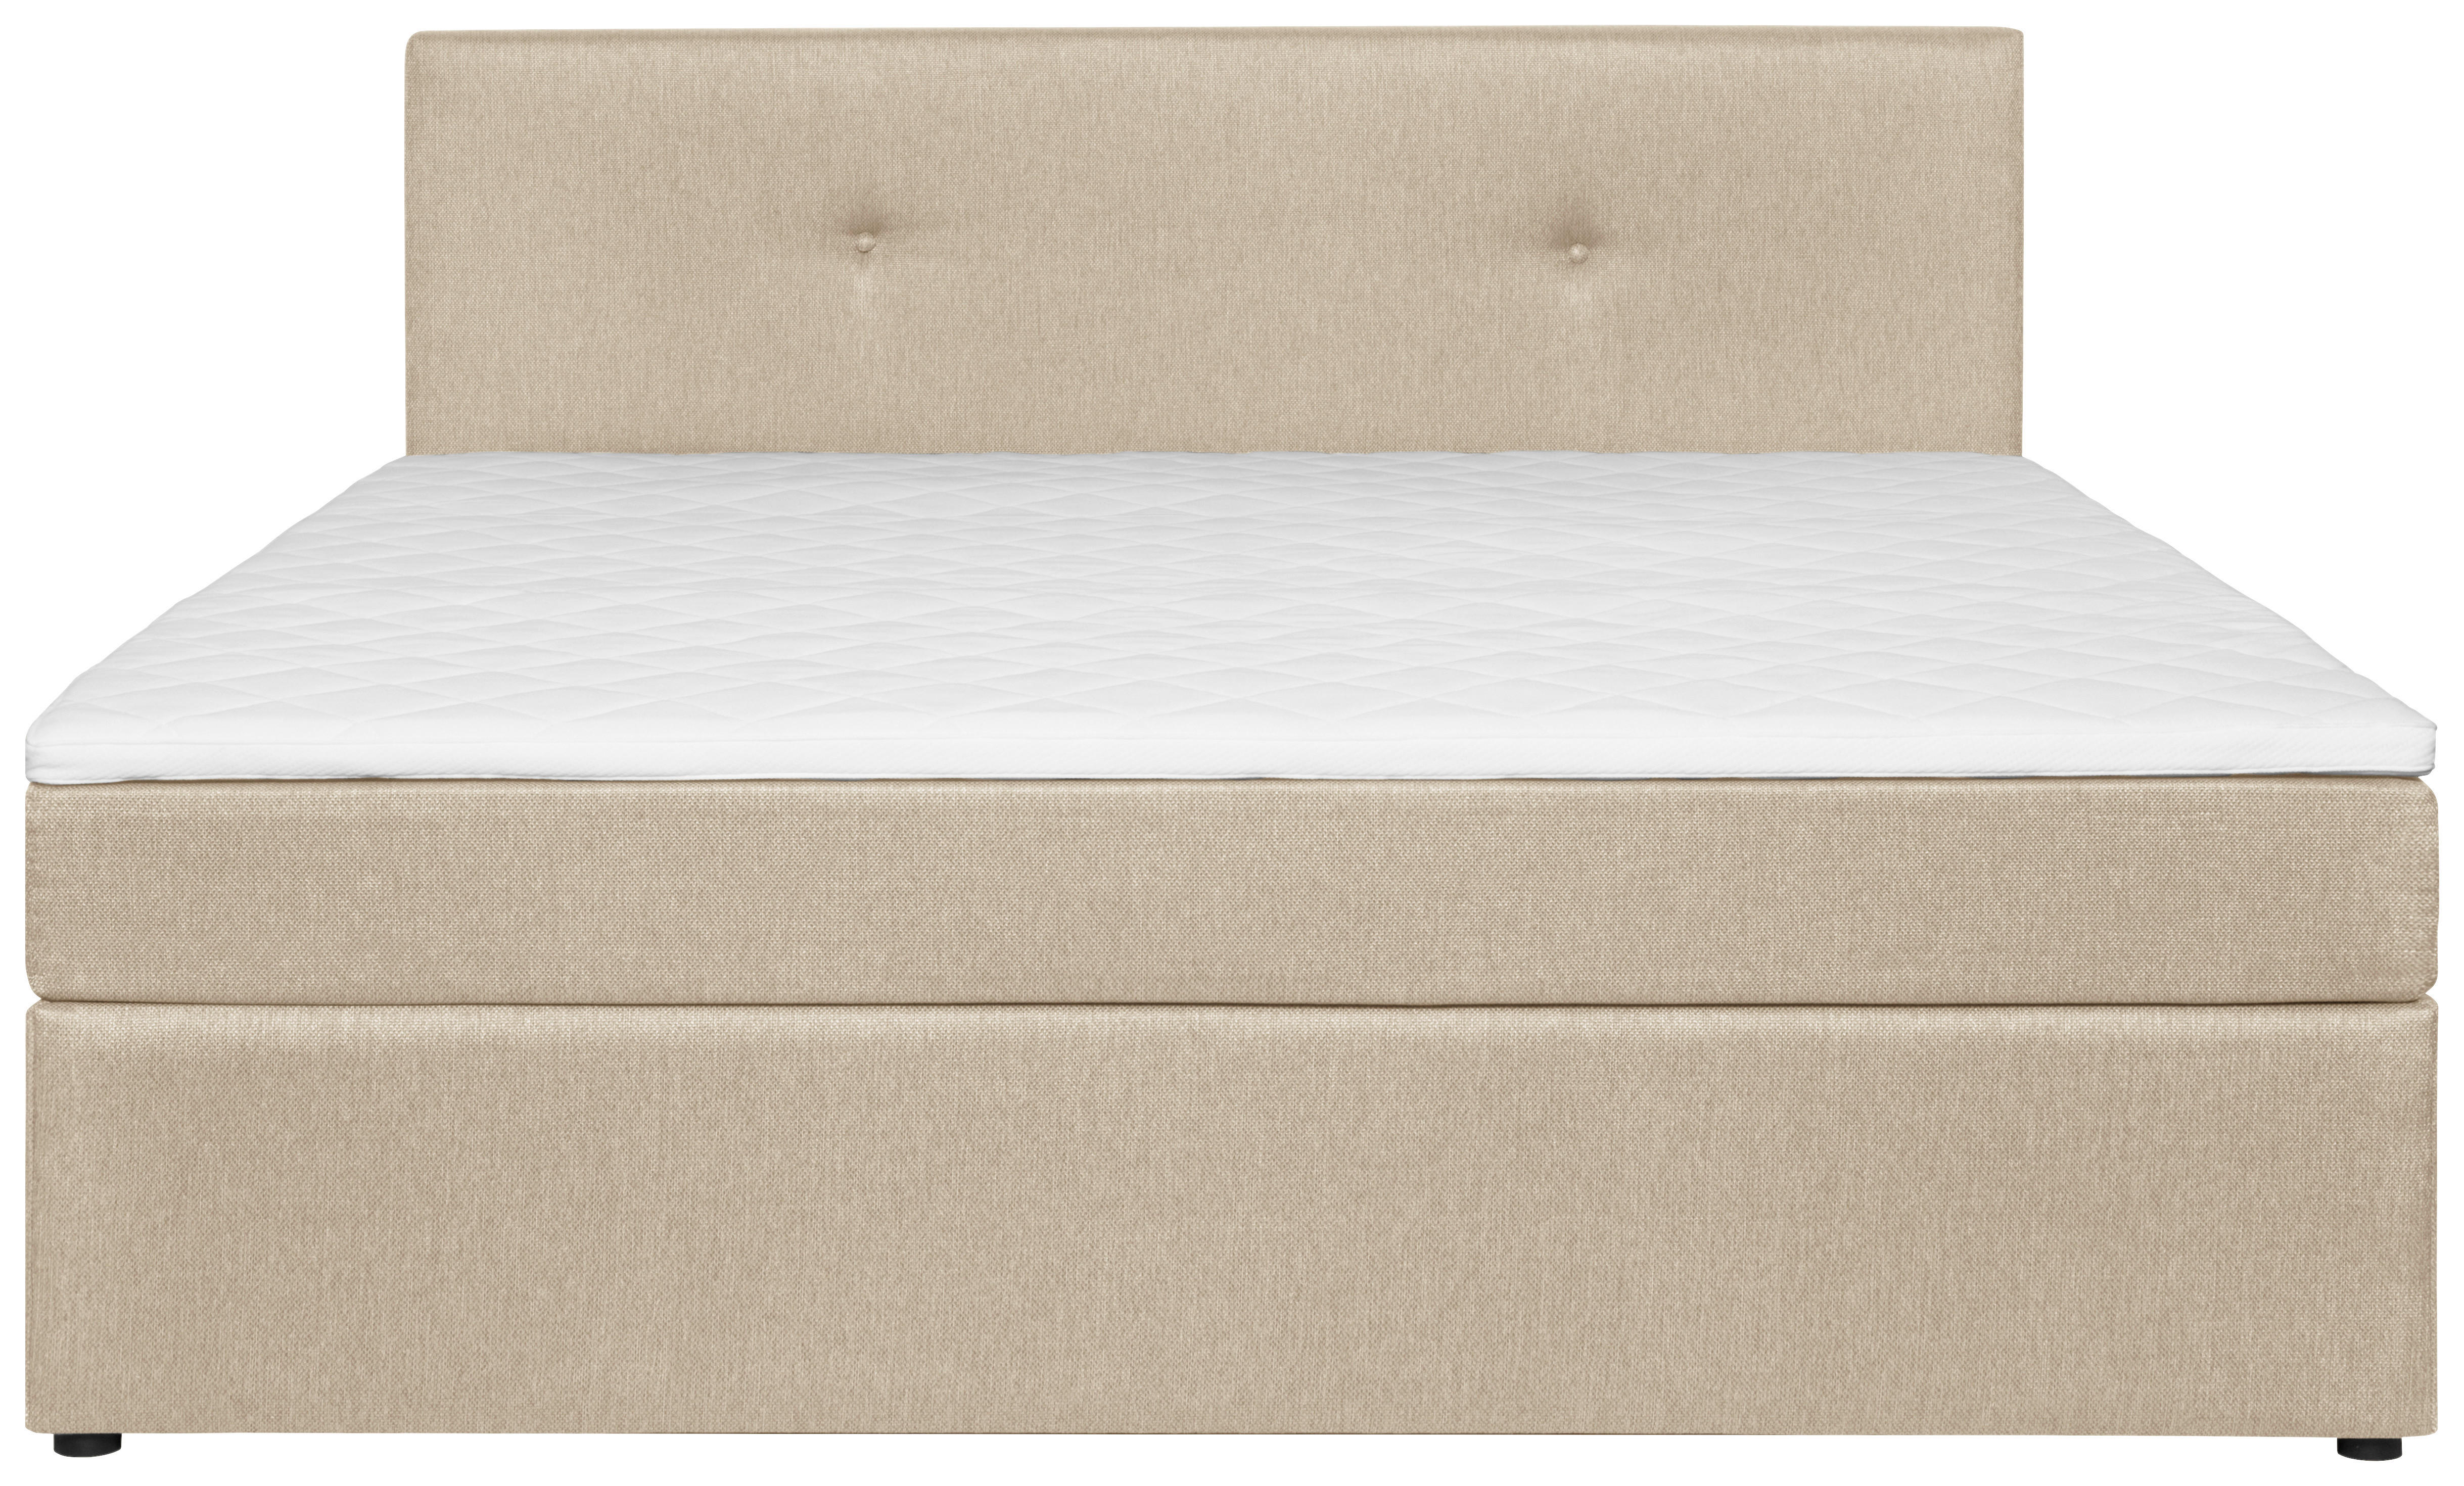 BOX KREVET    140/200 cm  - boje pijeska/crna, Konvencionalno, drvo/tekstil (140/200cm) - P & B